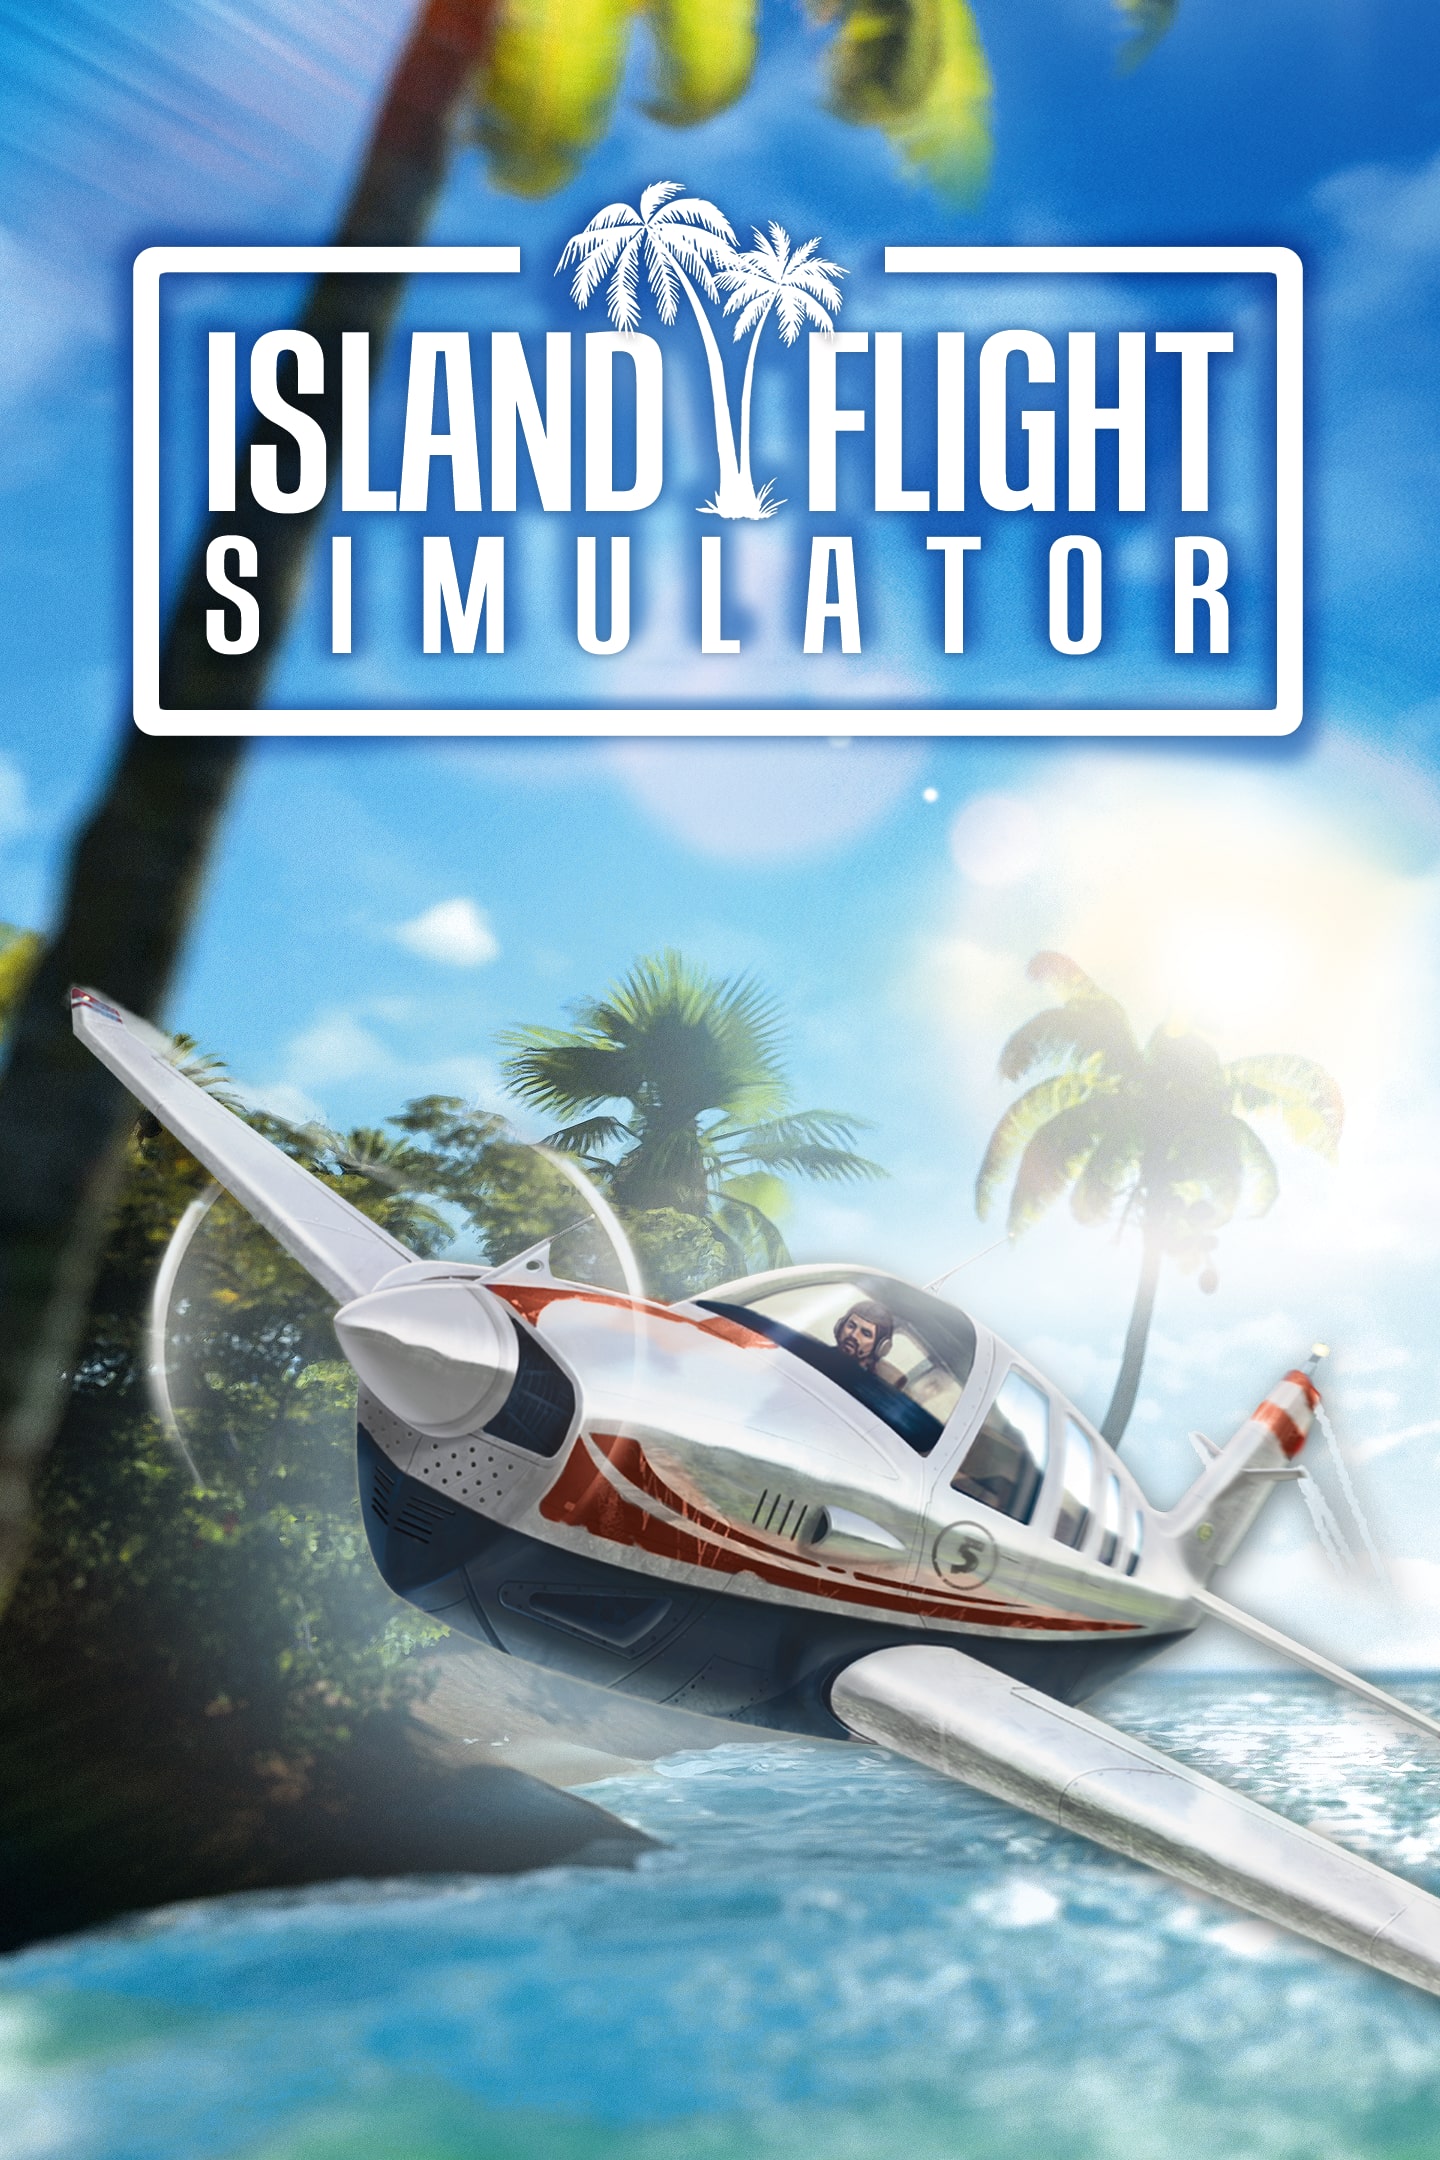 Microsoft Flight Simulator (Sony Playstation 4)